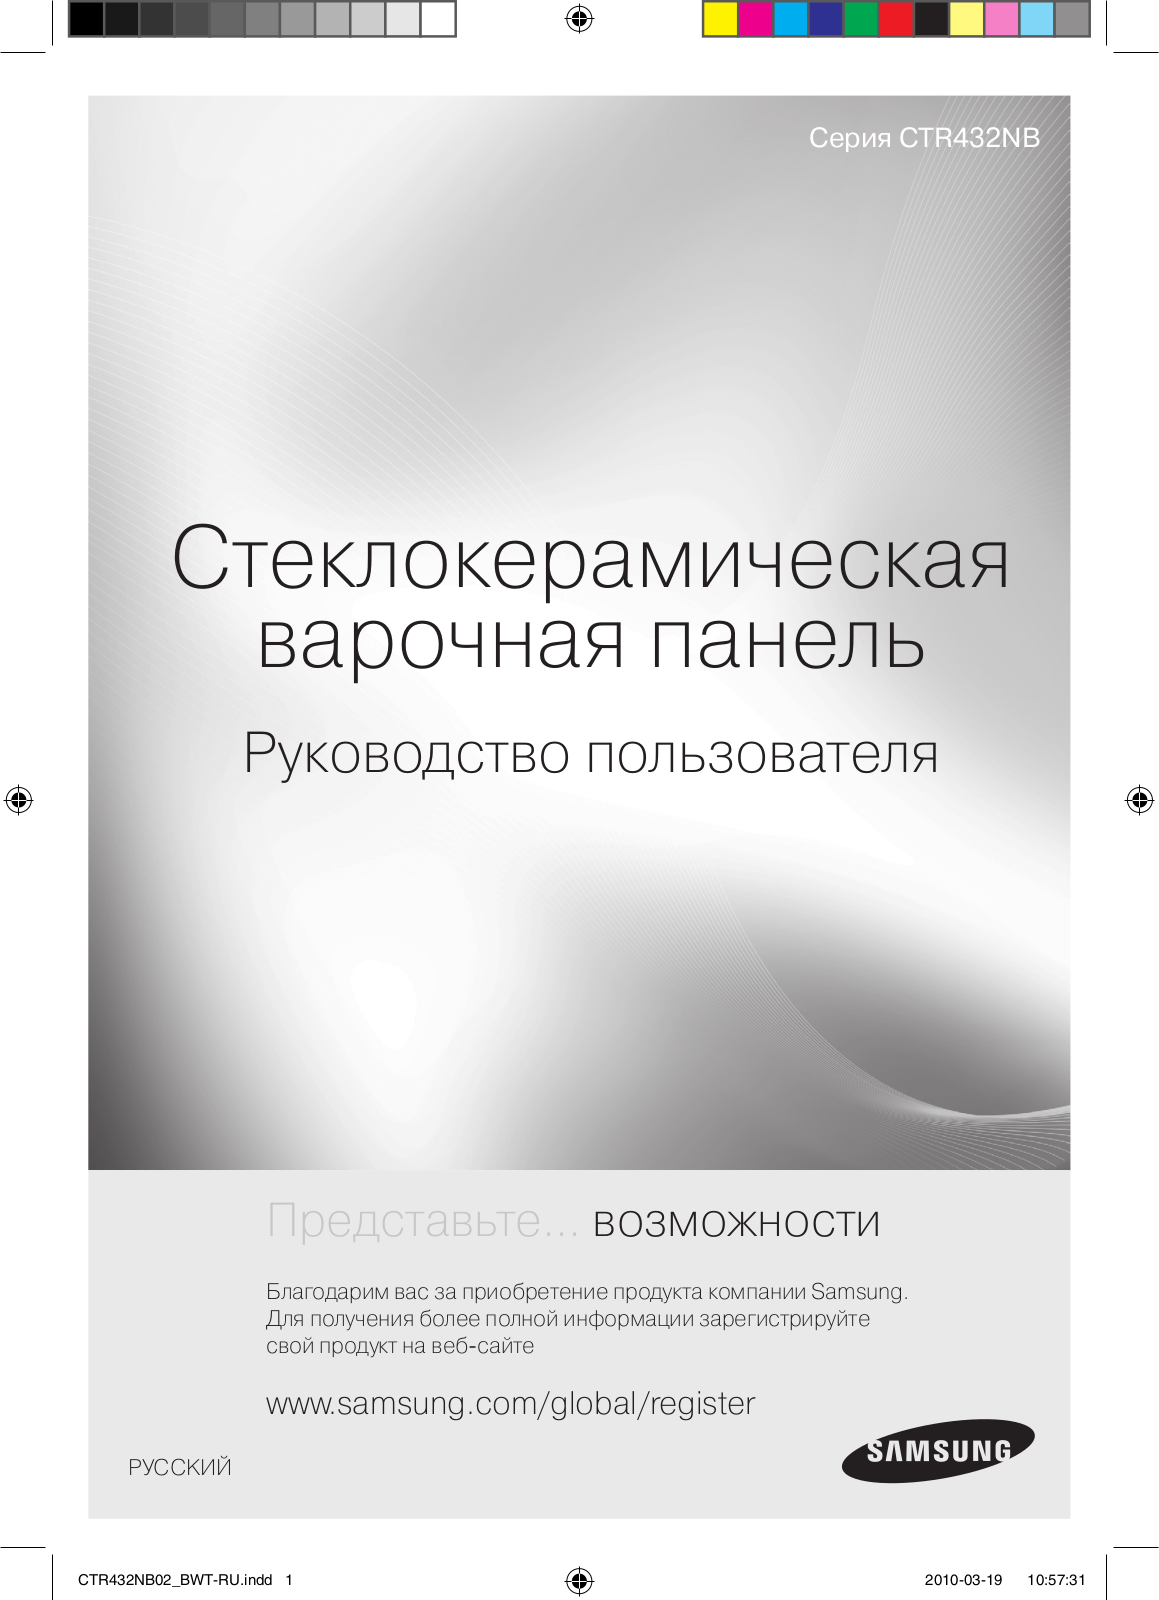 Samsung CTR432NB02 User Manual